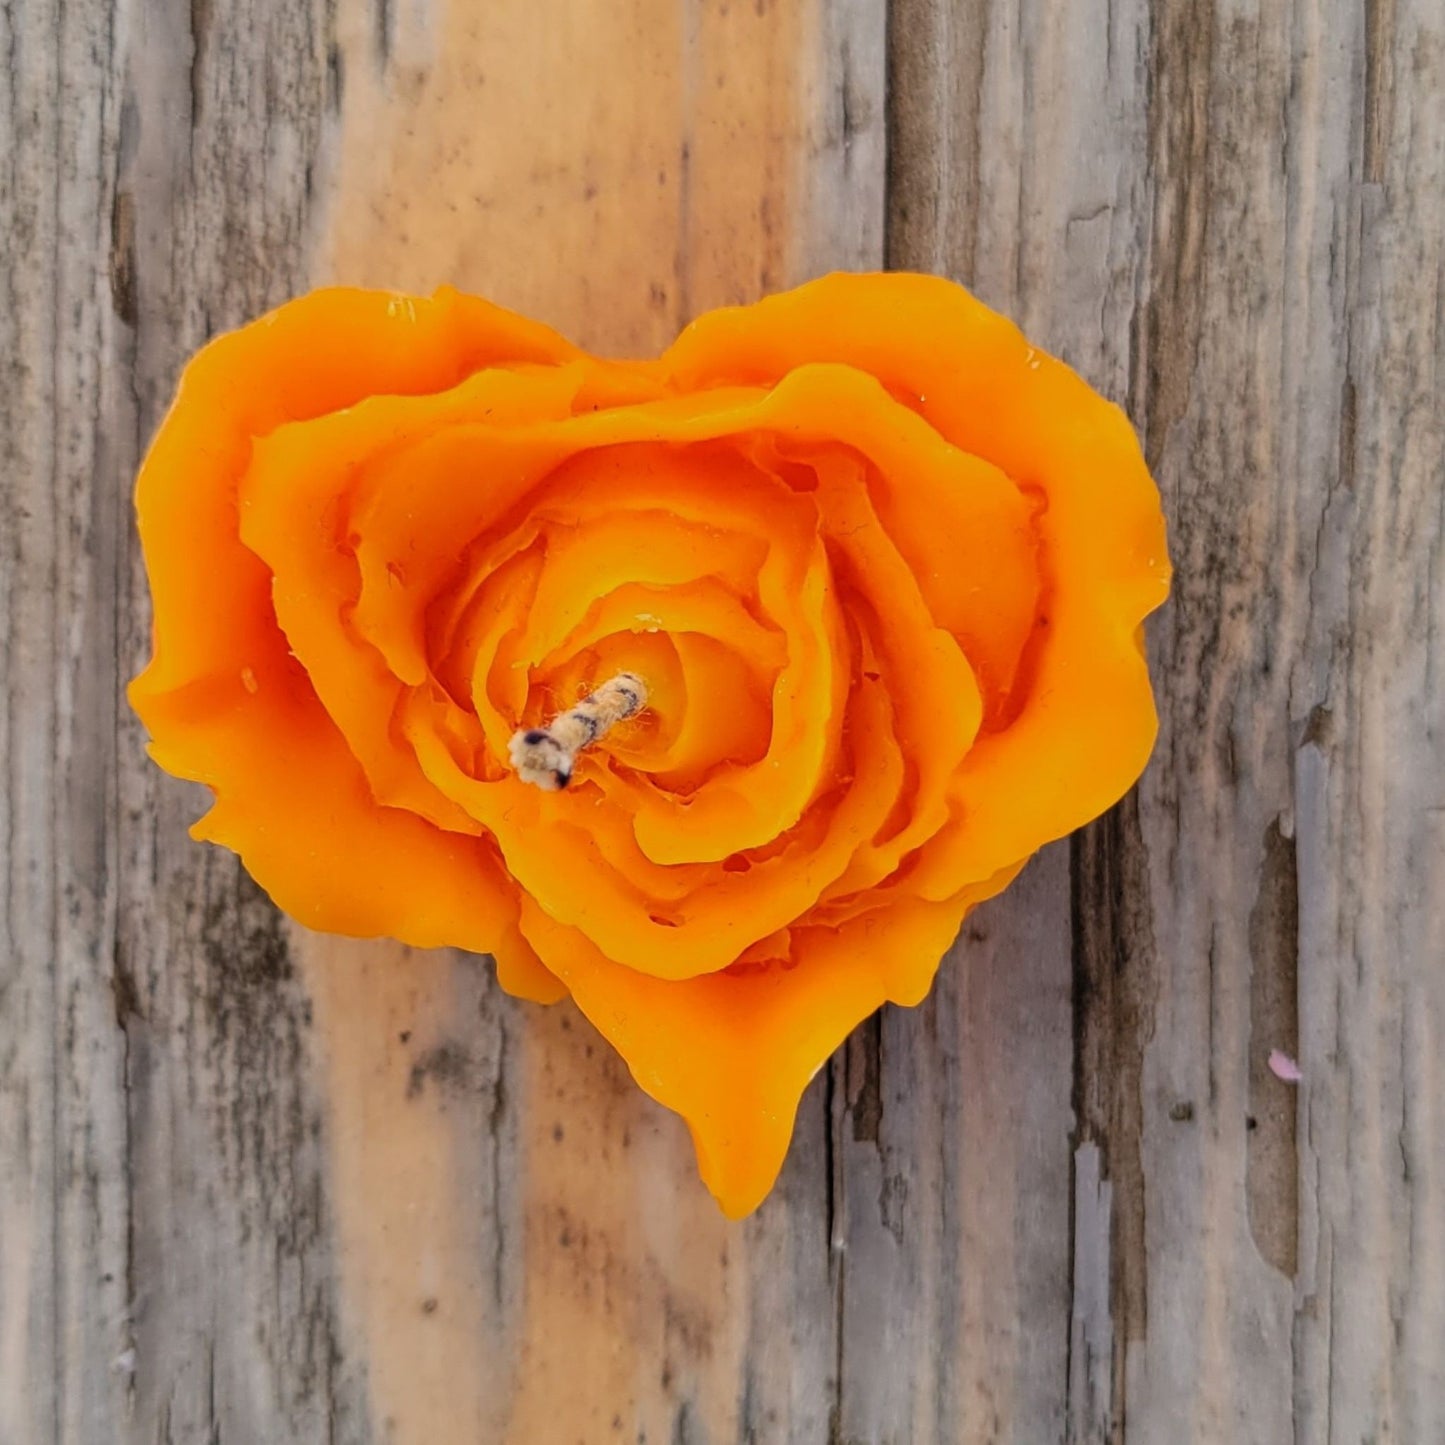 A handmade orange heart shaped flower votive candle.